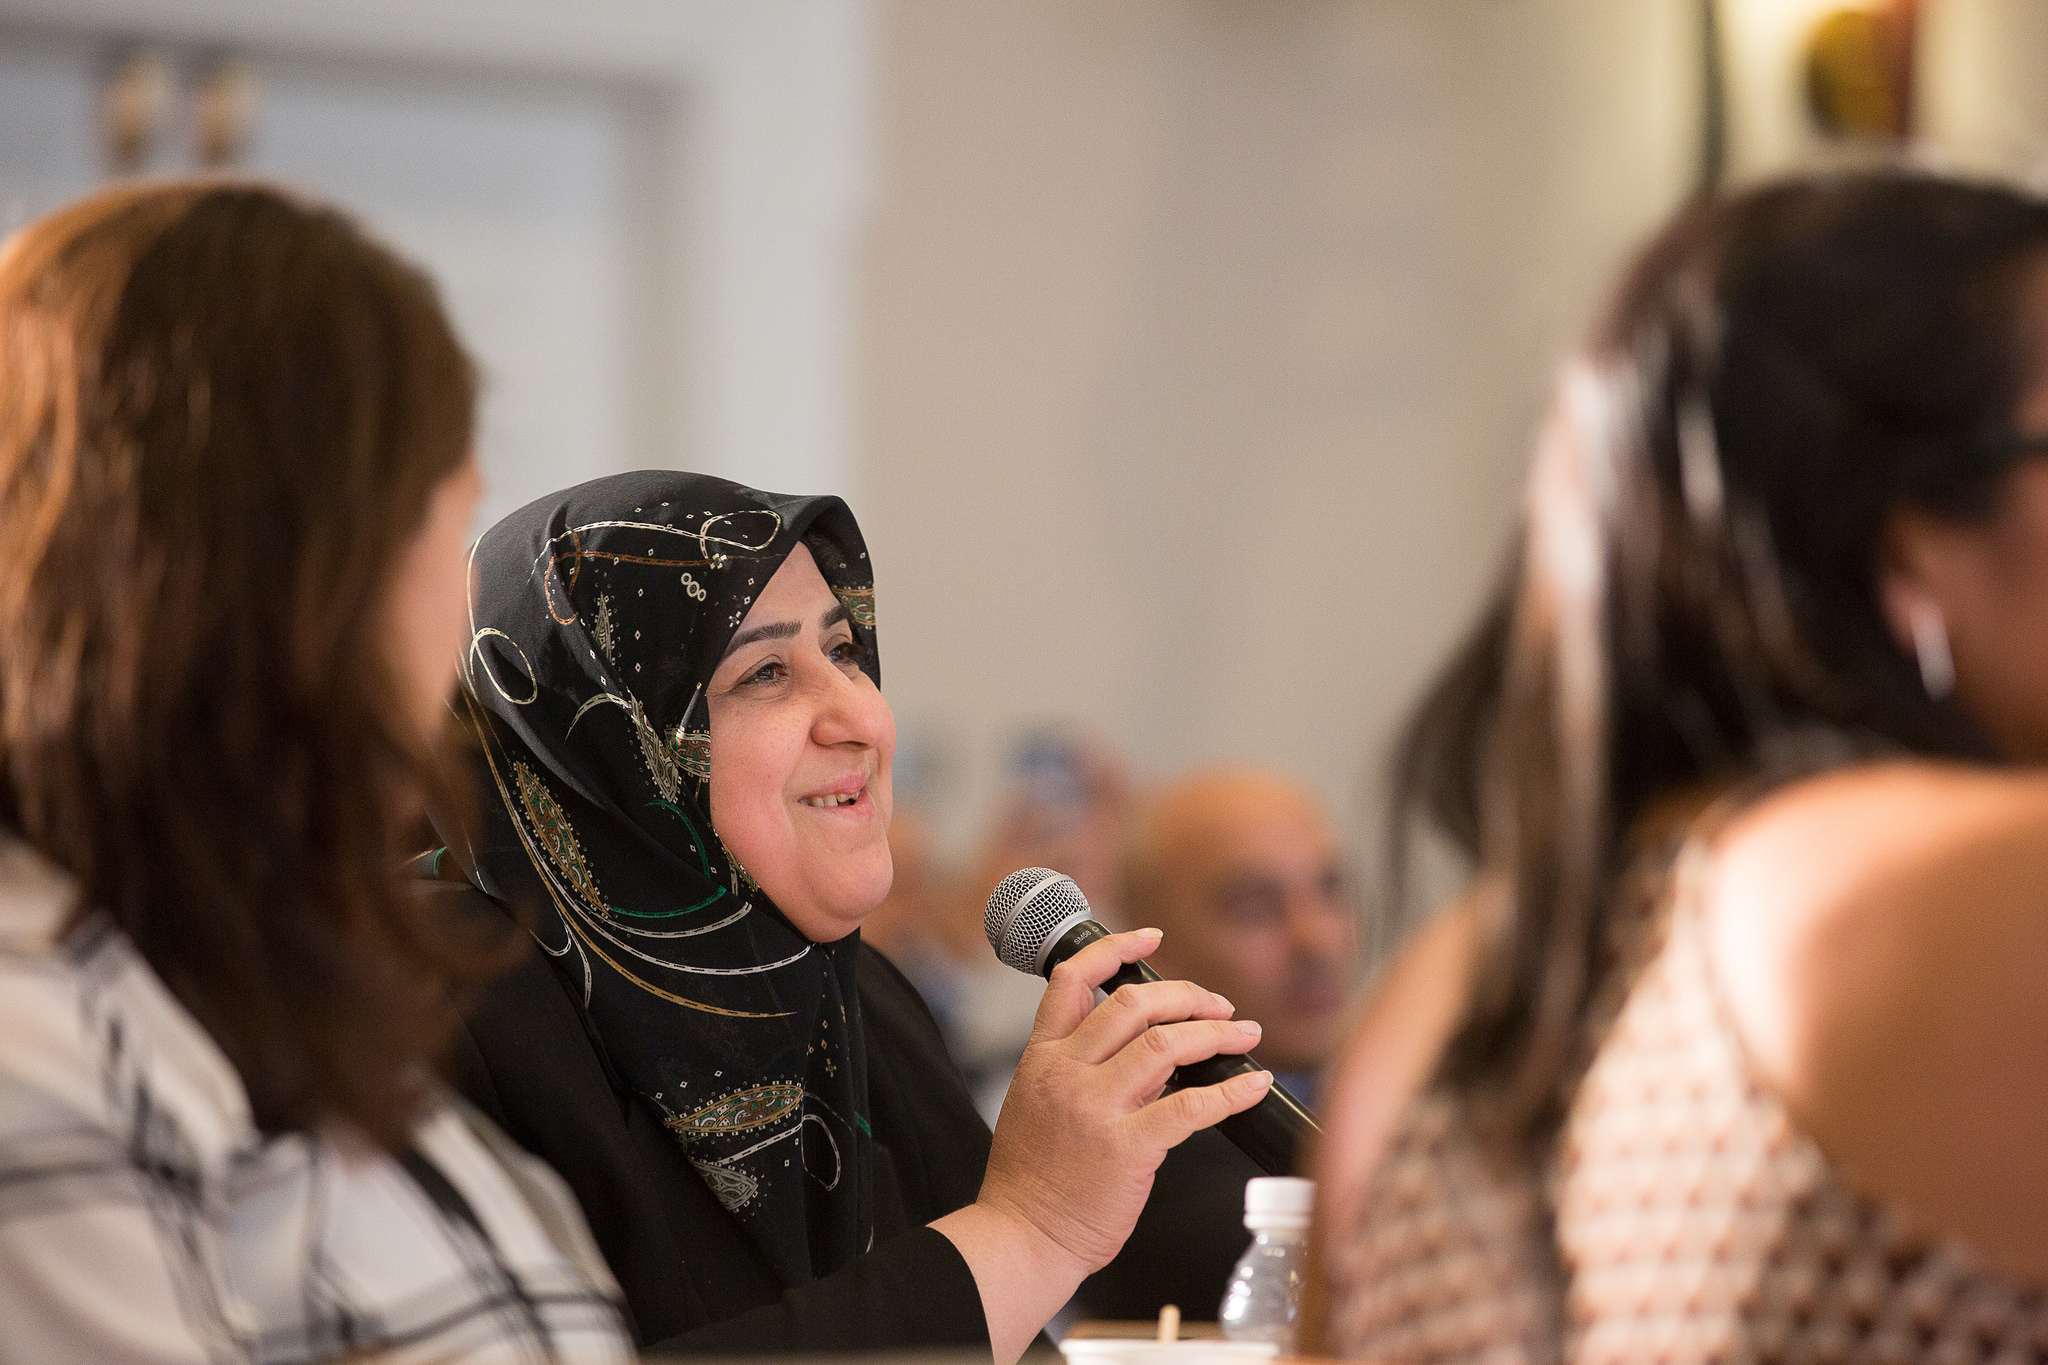 Khawlah Mousa | Courage through Female Leadership in Baghdad